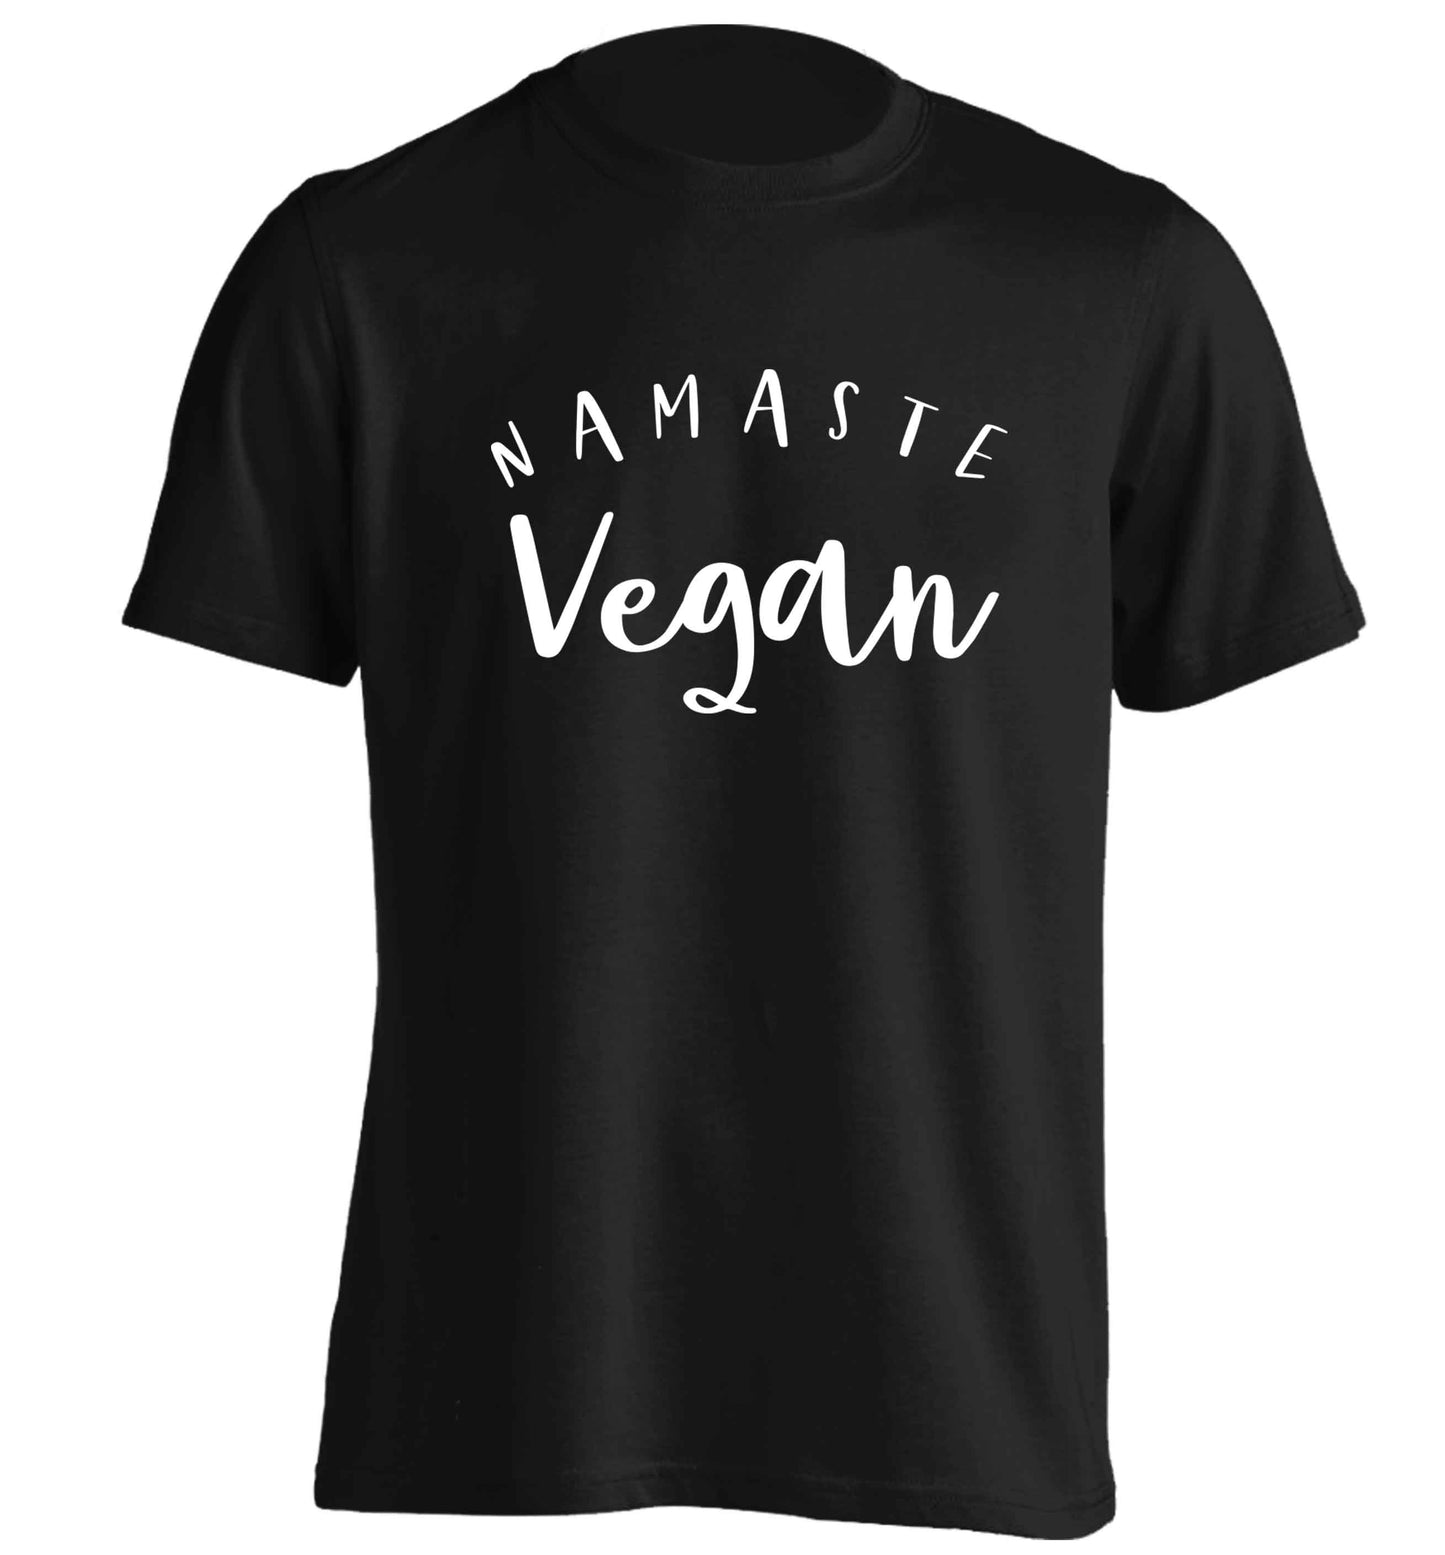 Namaste vegan adults unisex black Tshirt 2XL